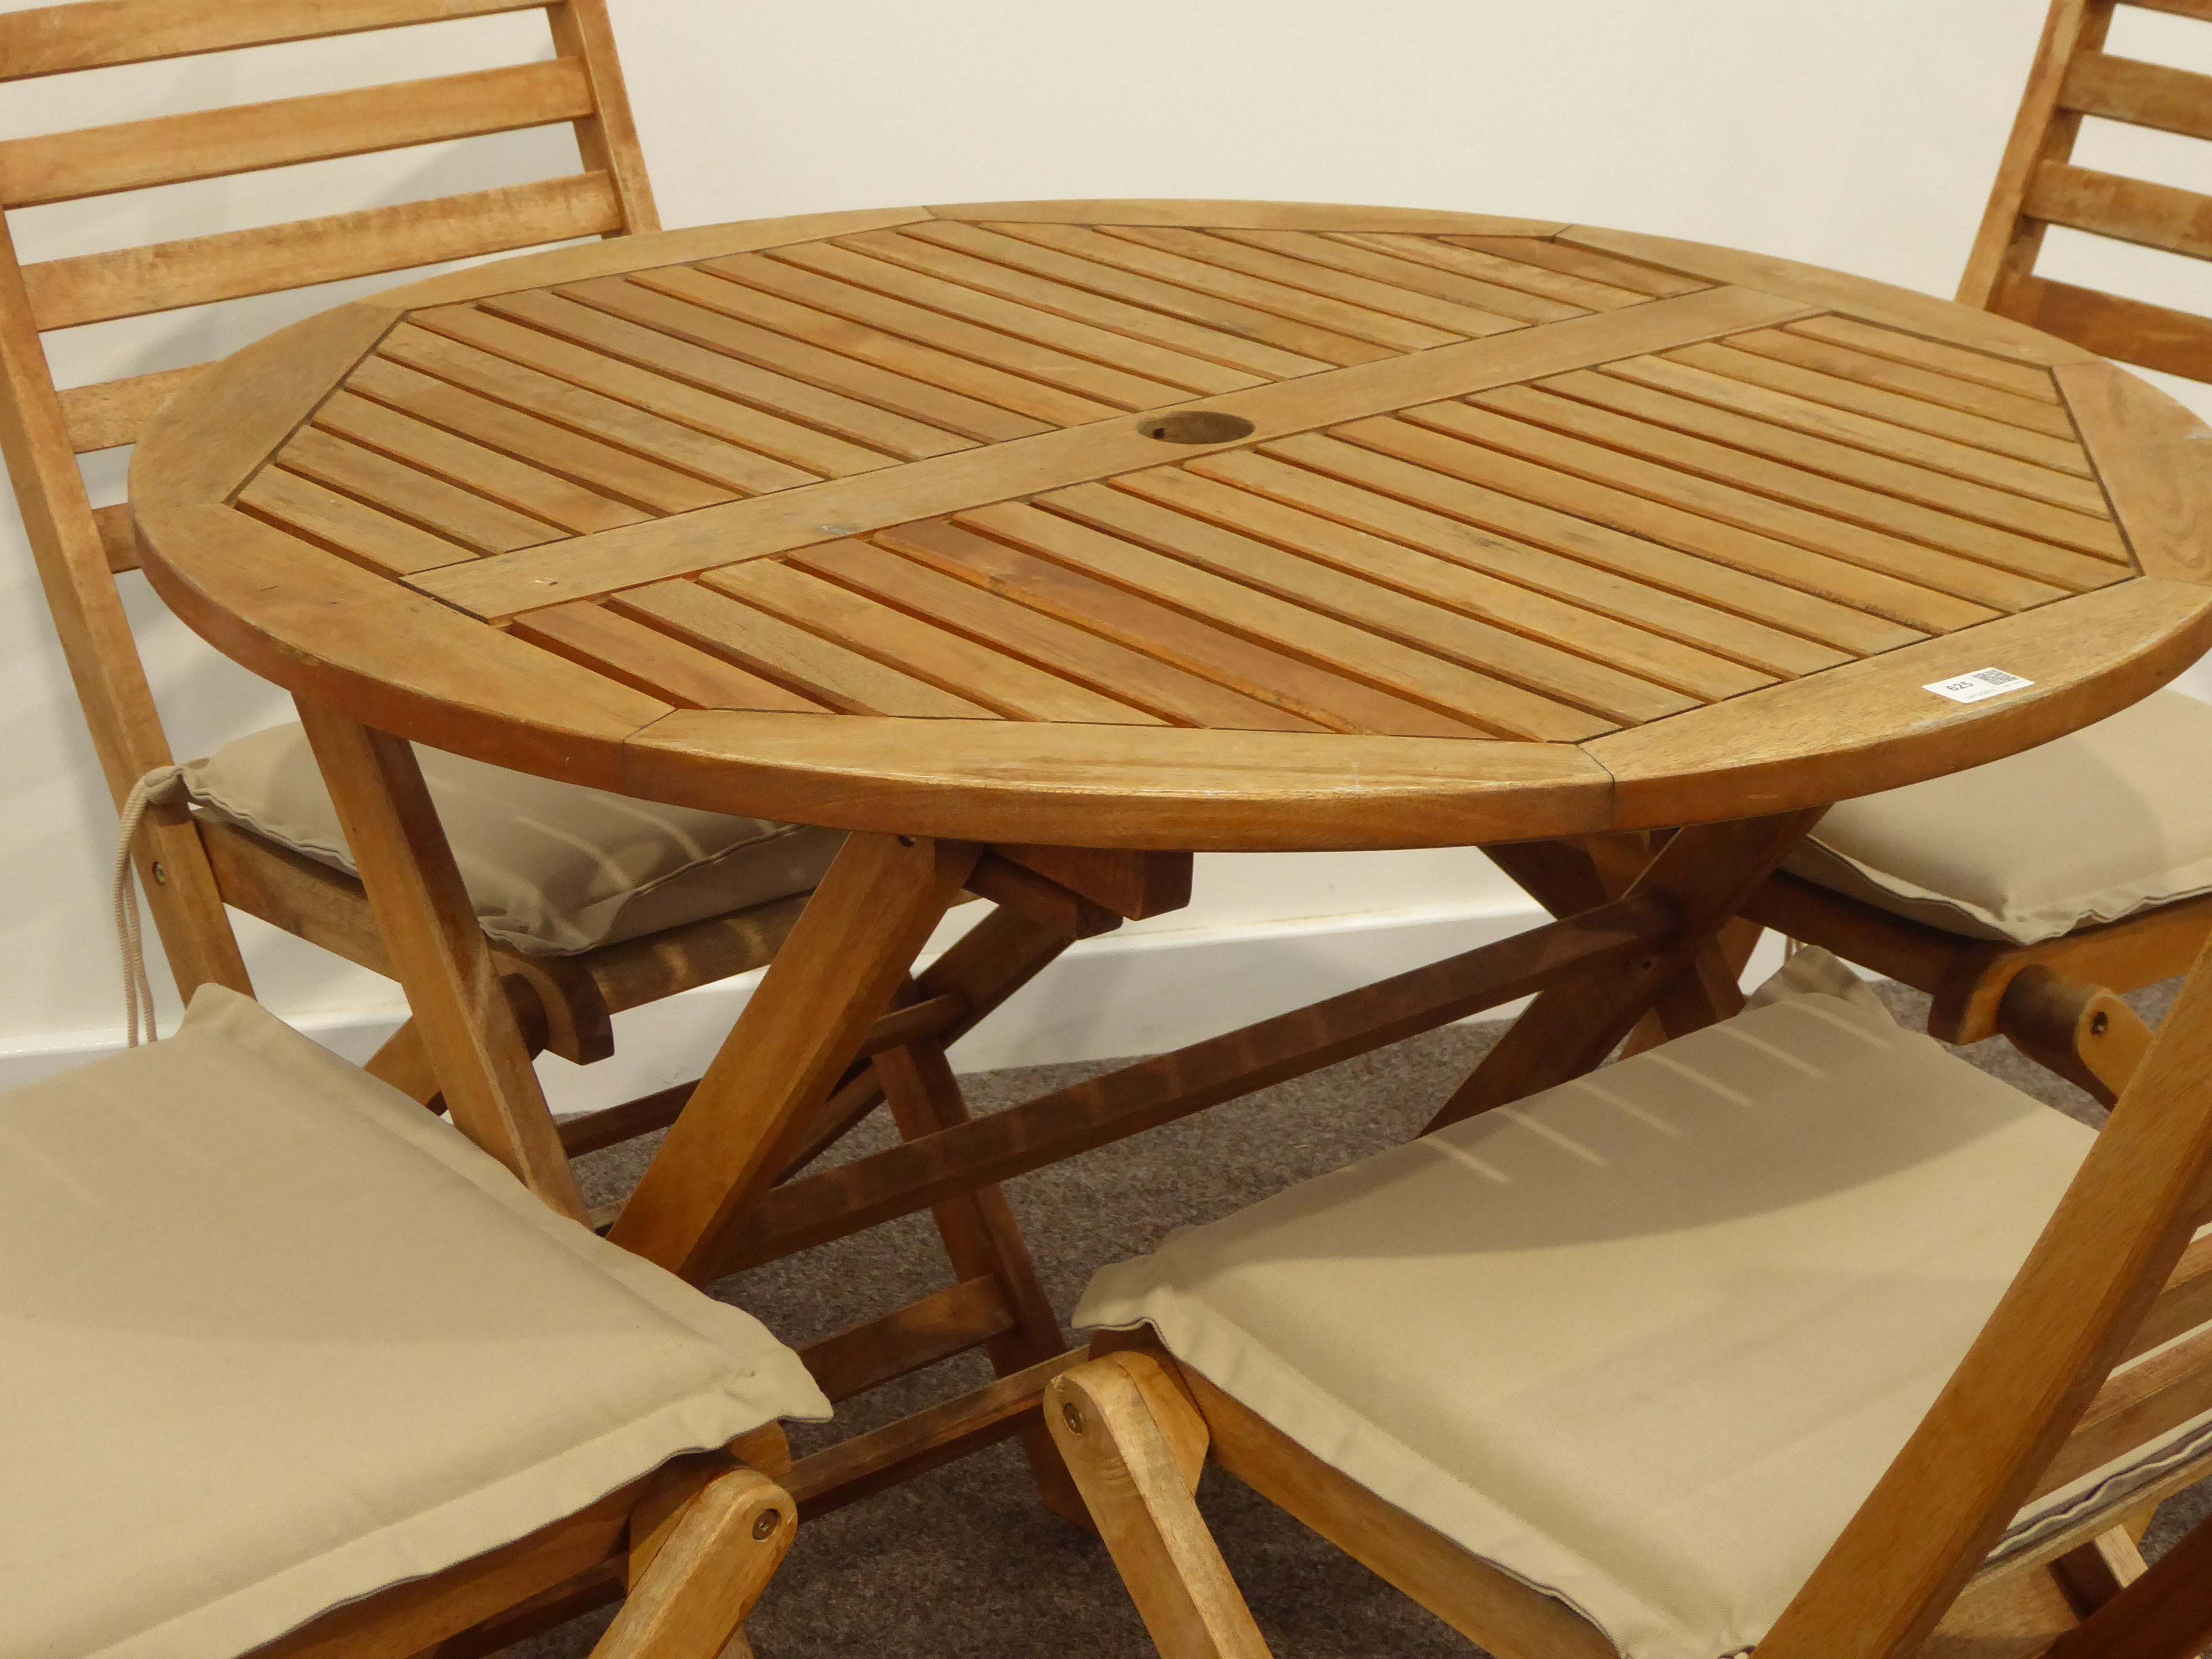 Hardwood folding circular garden table (D90cm), - Image 2 of 2